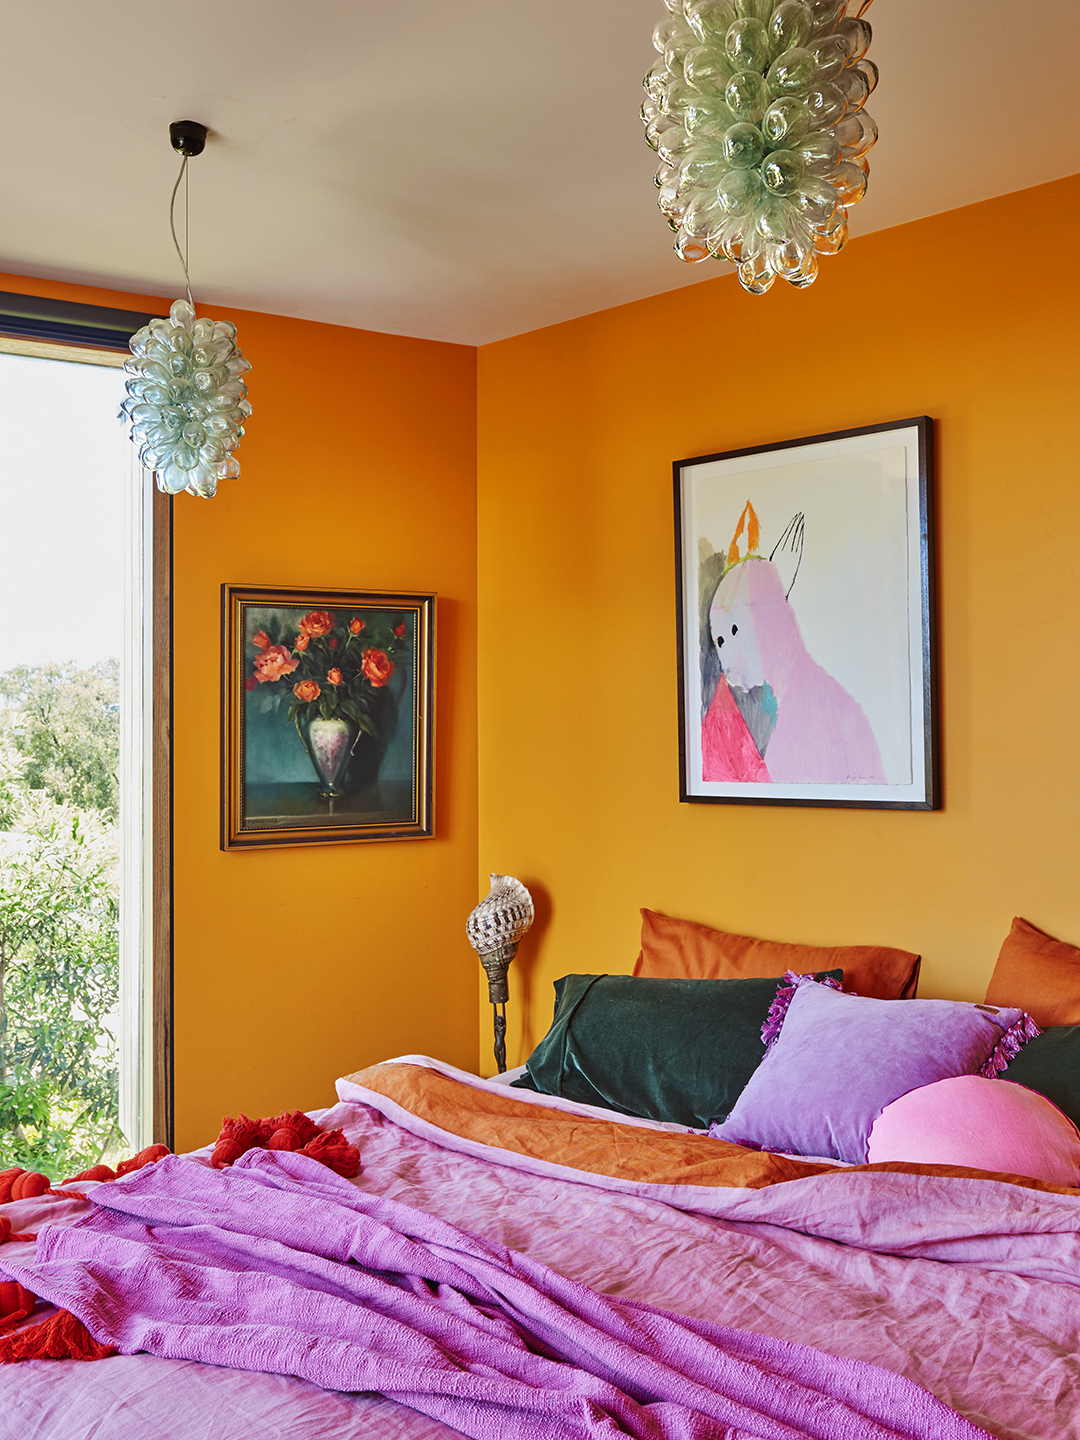 Bedroom with orange walls and magenta bedding